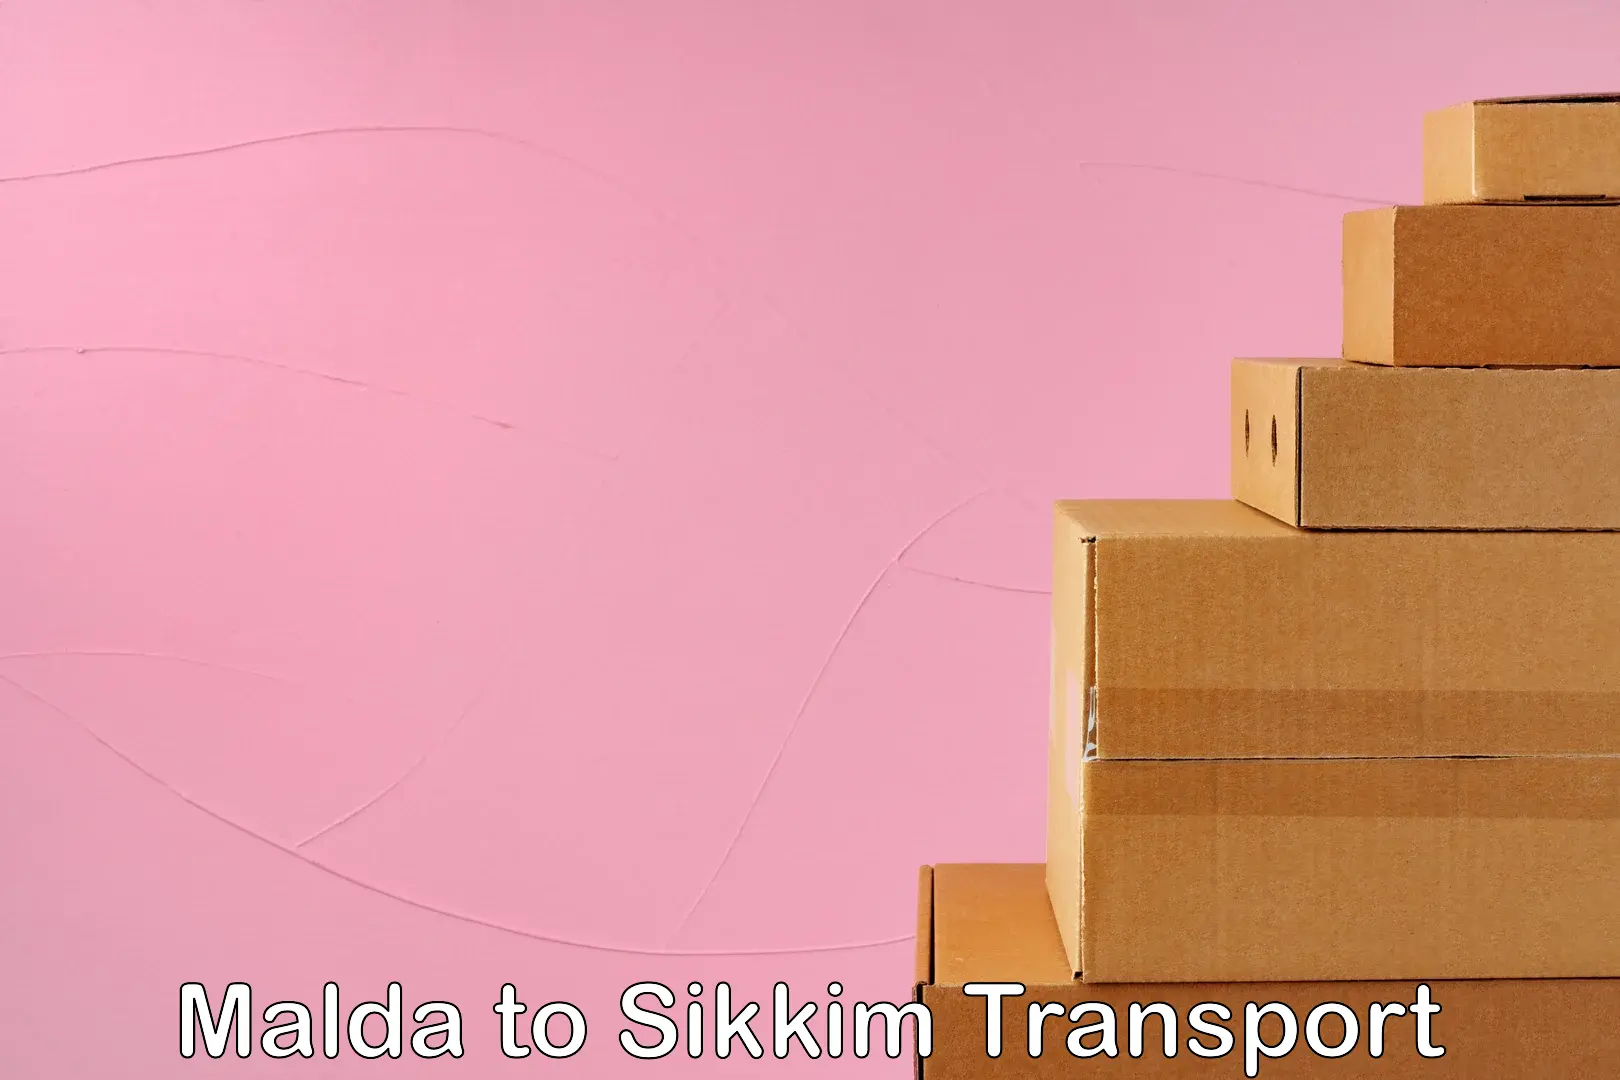 Sending bike to another city Malda to Sikkim